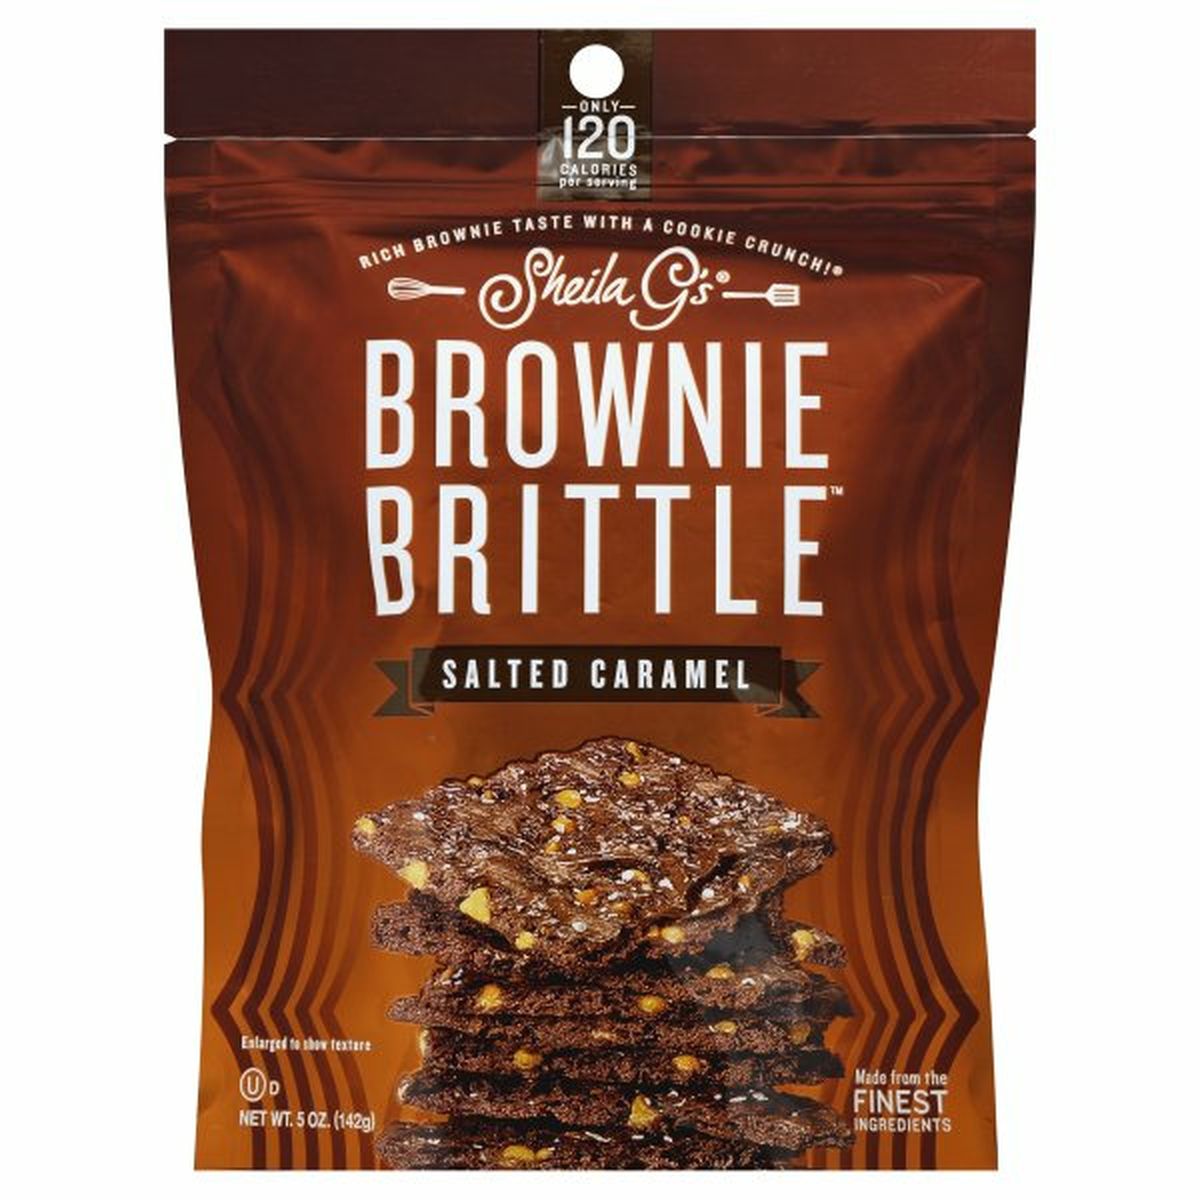 Calories in Sheila G's Brownie Brittle Sheila G's Brownie Brittle, Salted Caramel